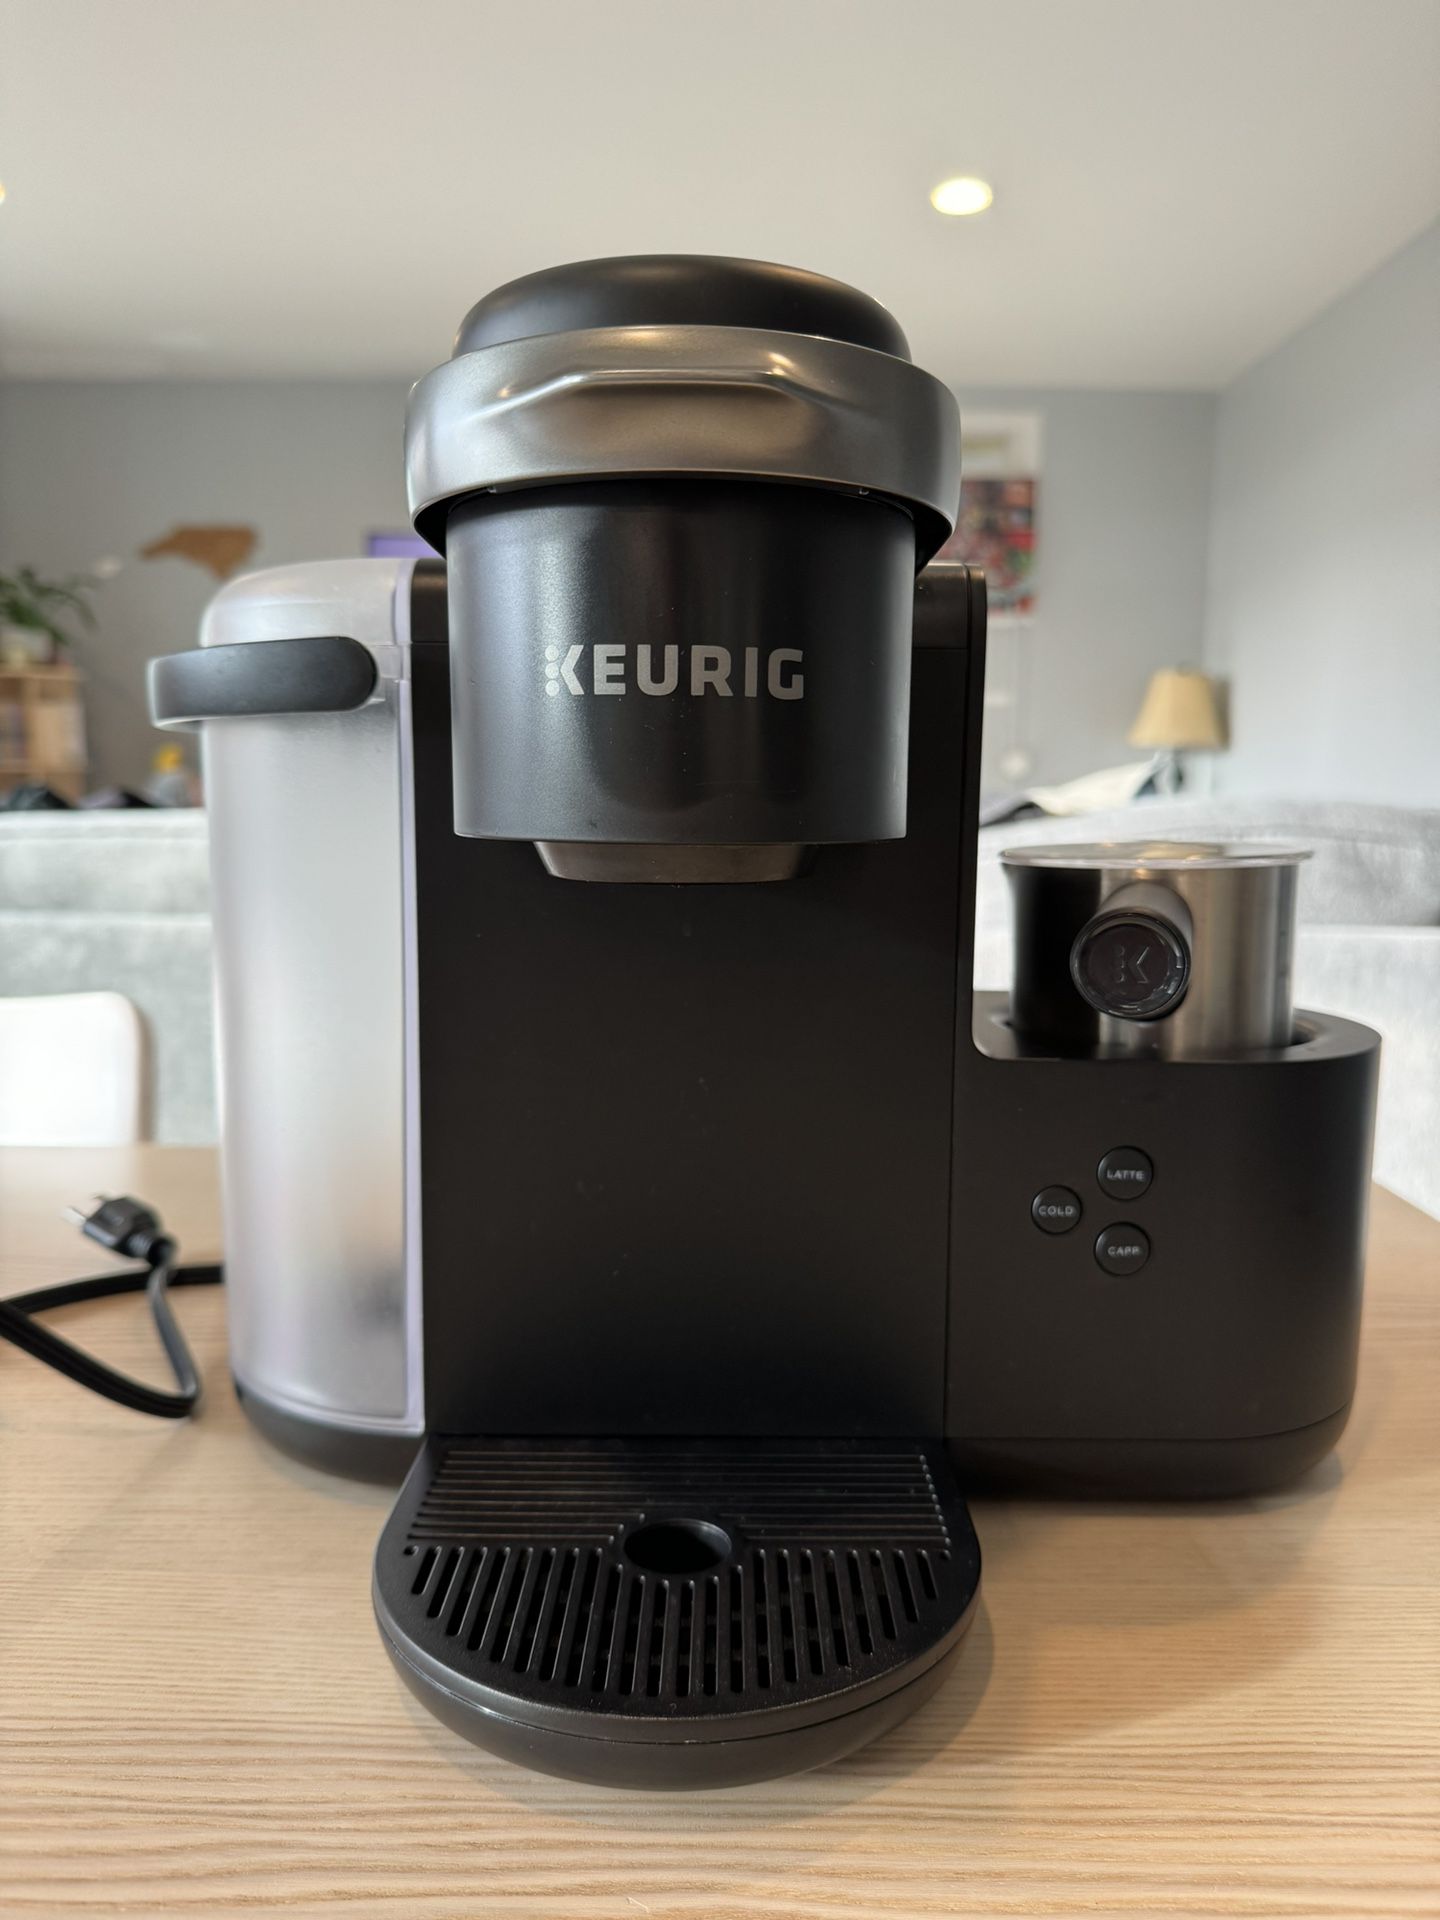 Keurig Coffee machine with reusable capsule cup